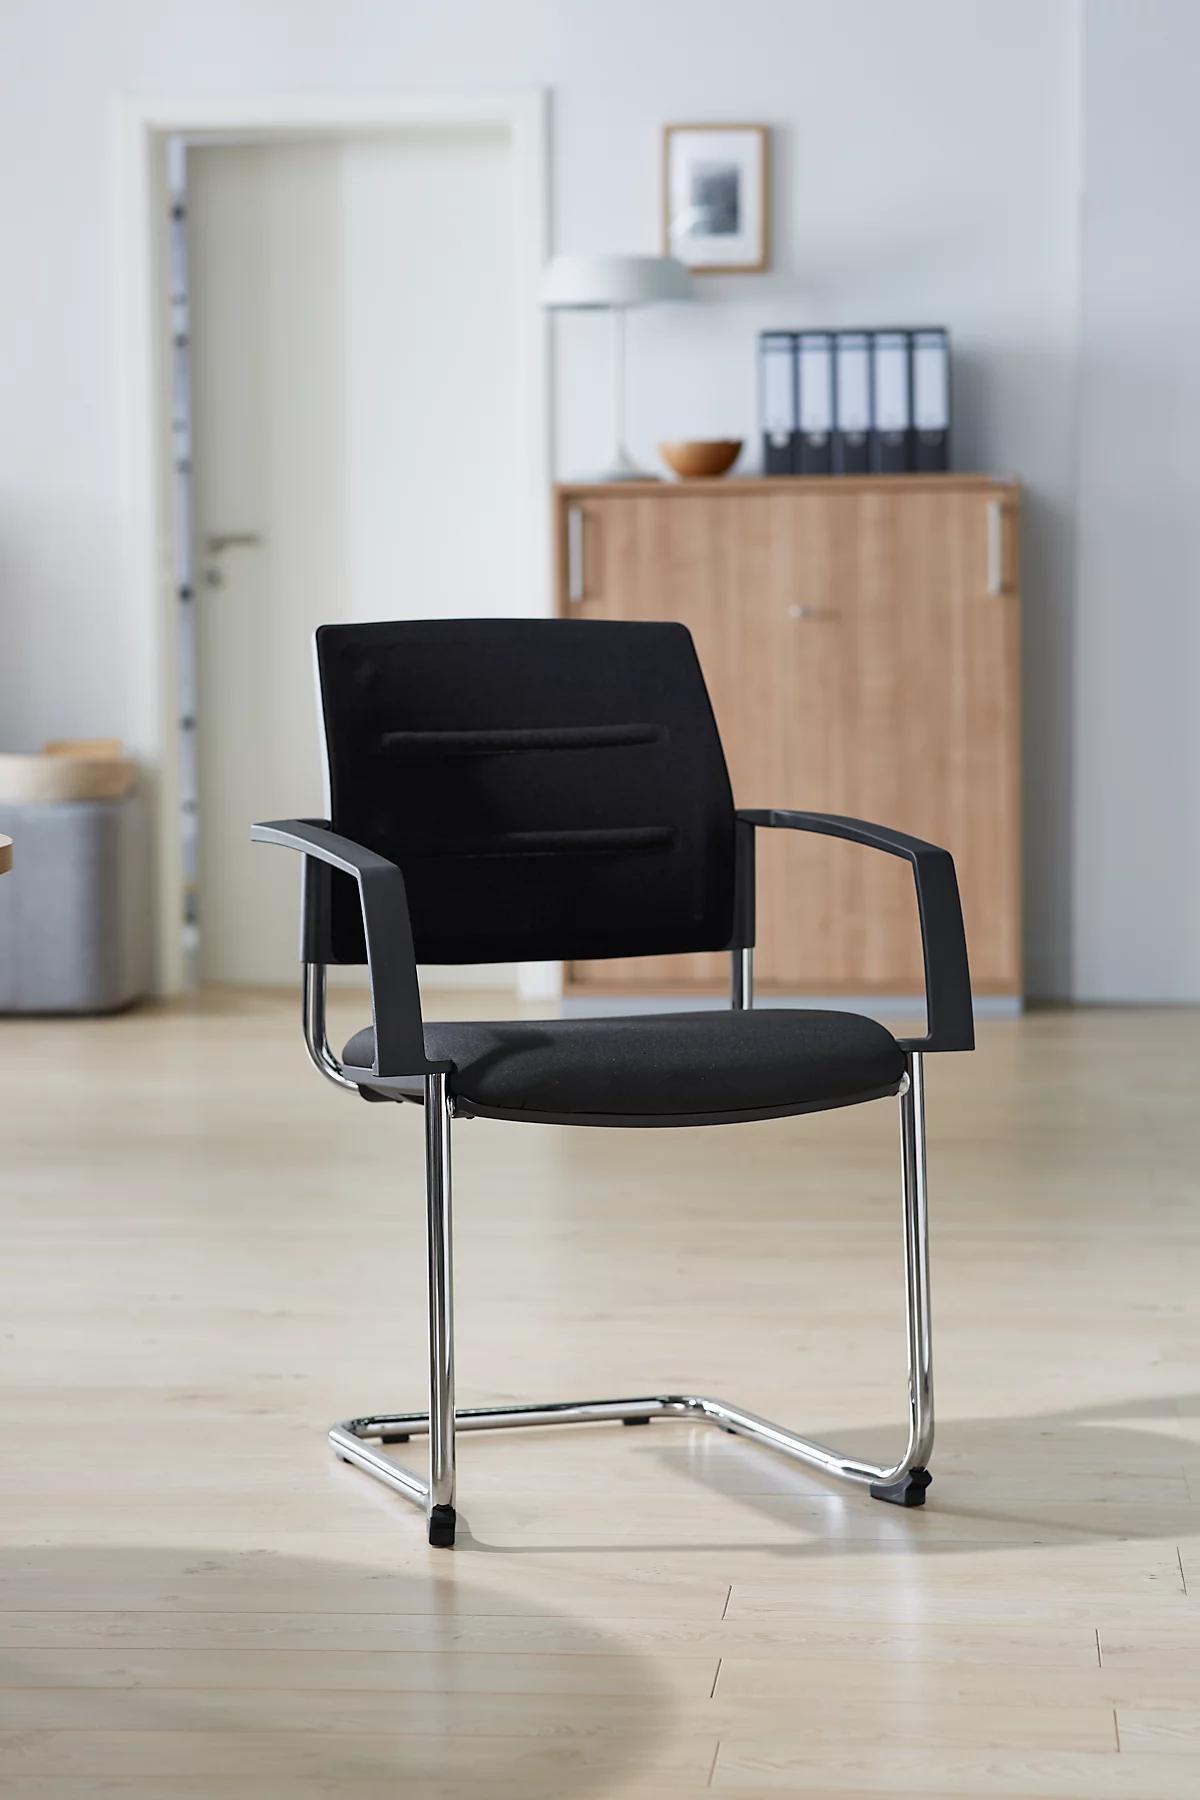 Schäfer Shop Select silla basculante SSI Proline Visit S2, ergonómica, con reposabrazos, apilable hasta 4 piezas, ancho 480 x fondo 480 x alto 480 mm, negro/negro